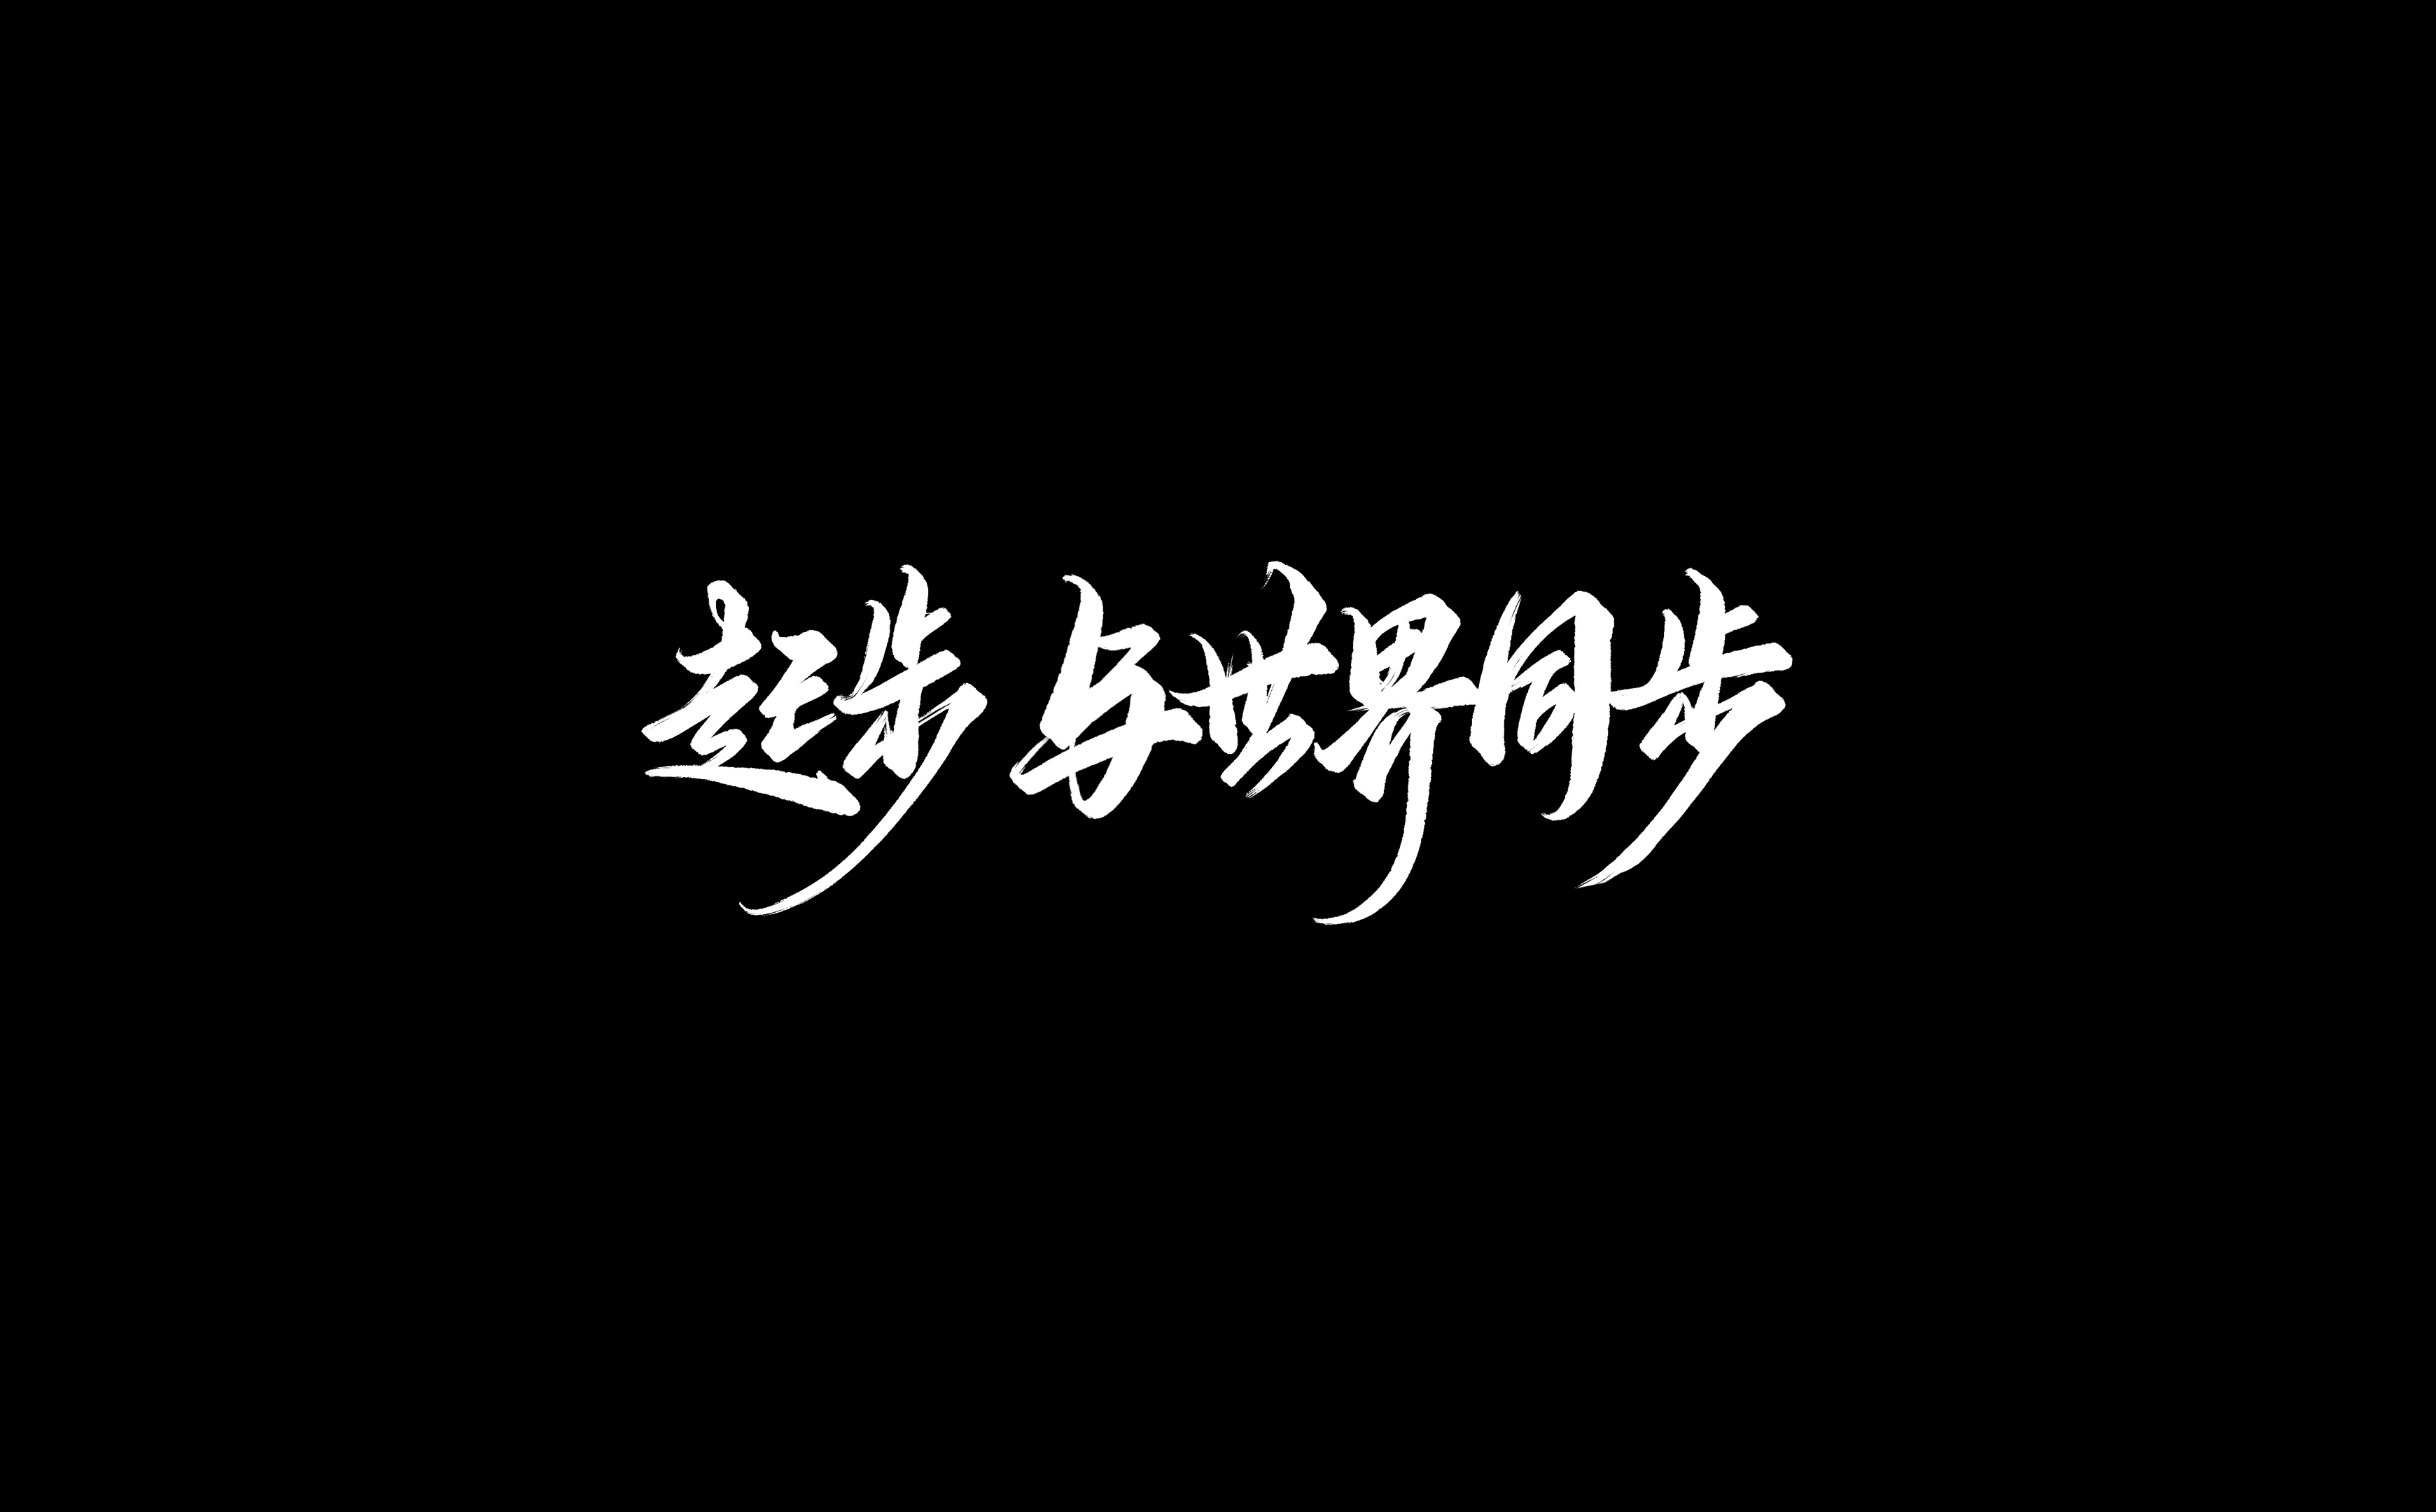 Interesting Chinese Creative Font Design-Font Design of Some Interesting Internet Catchwords